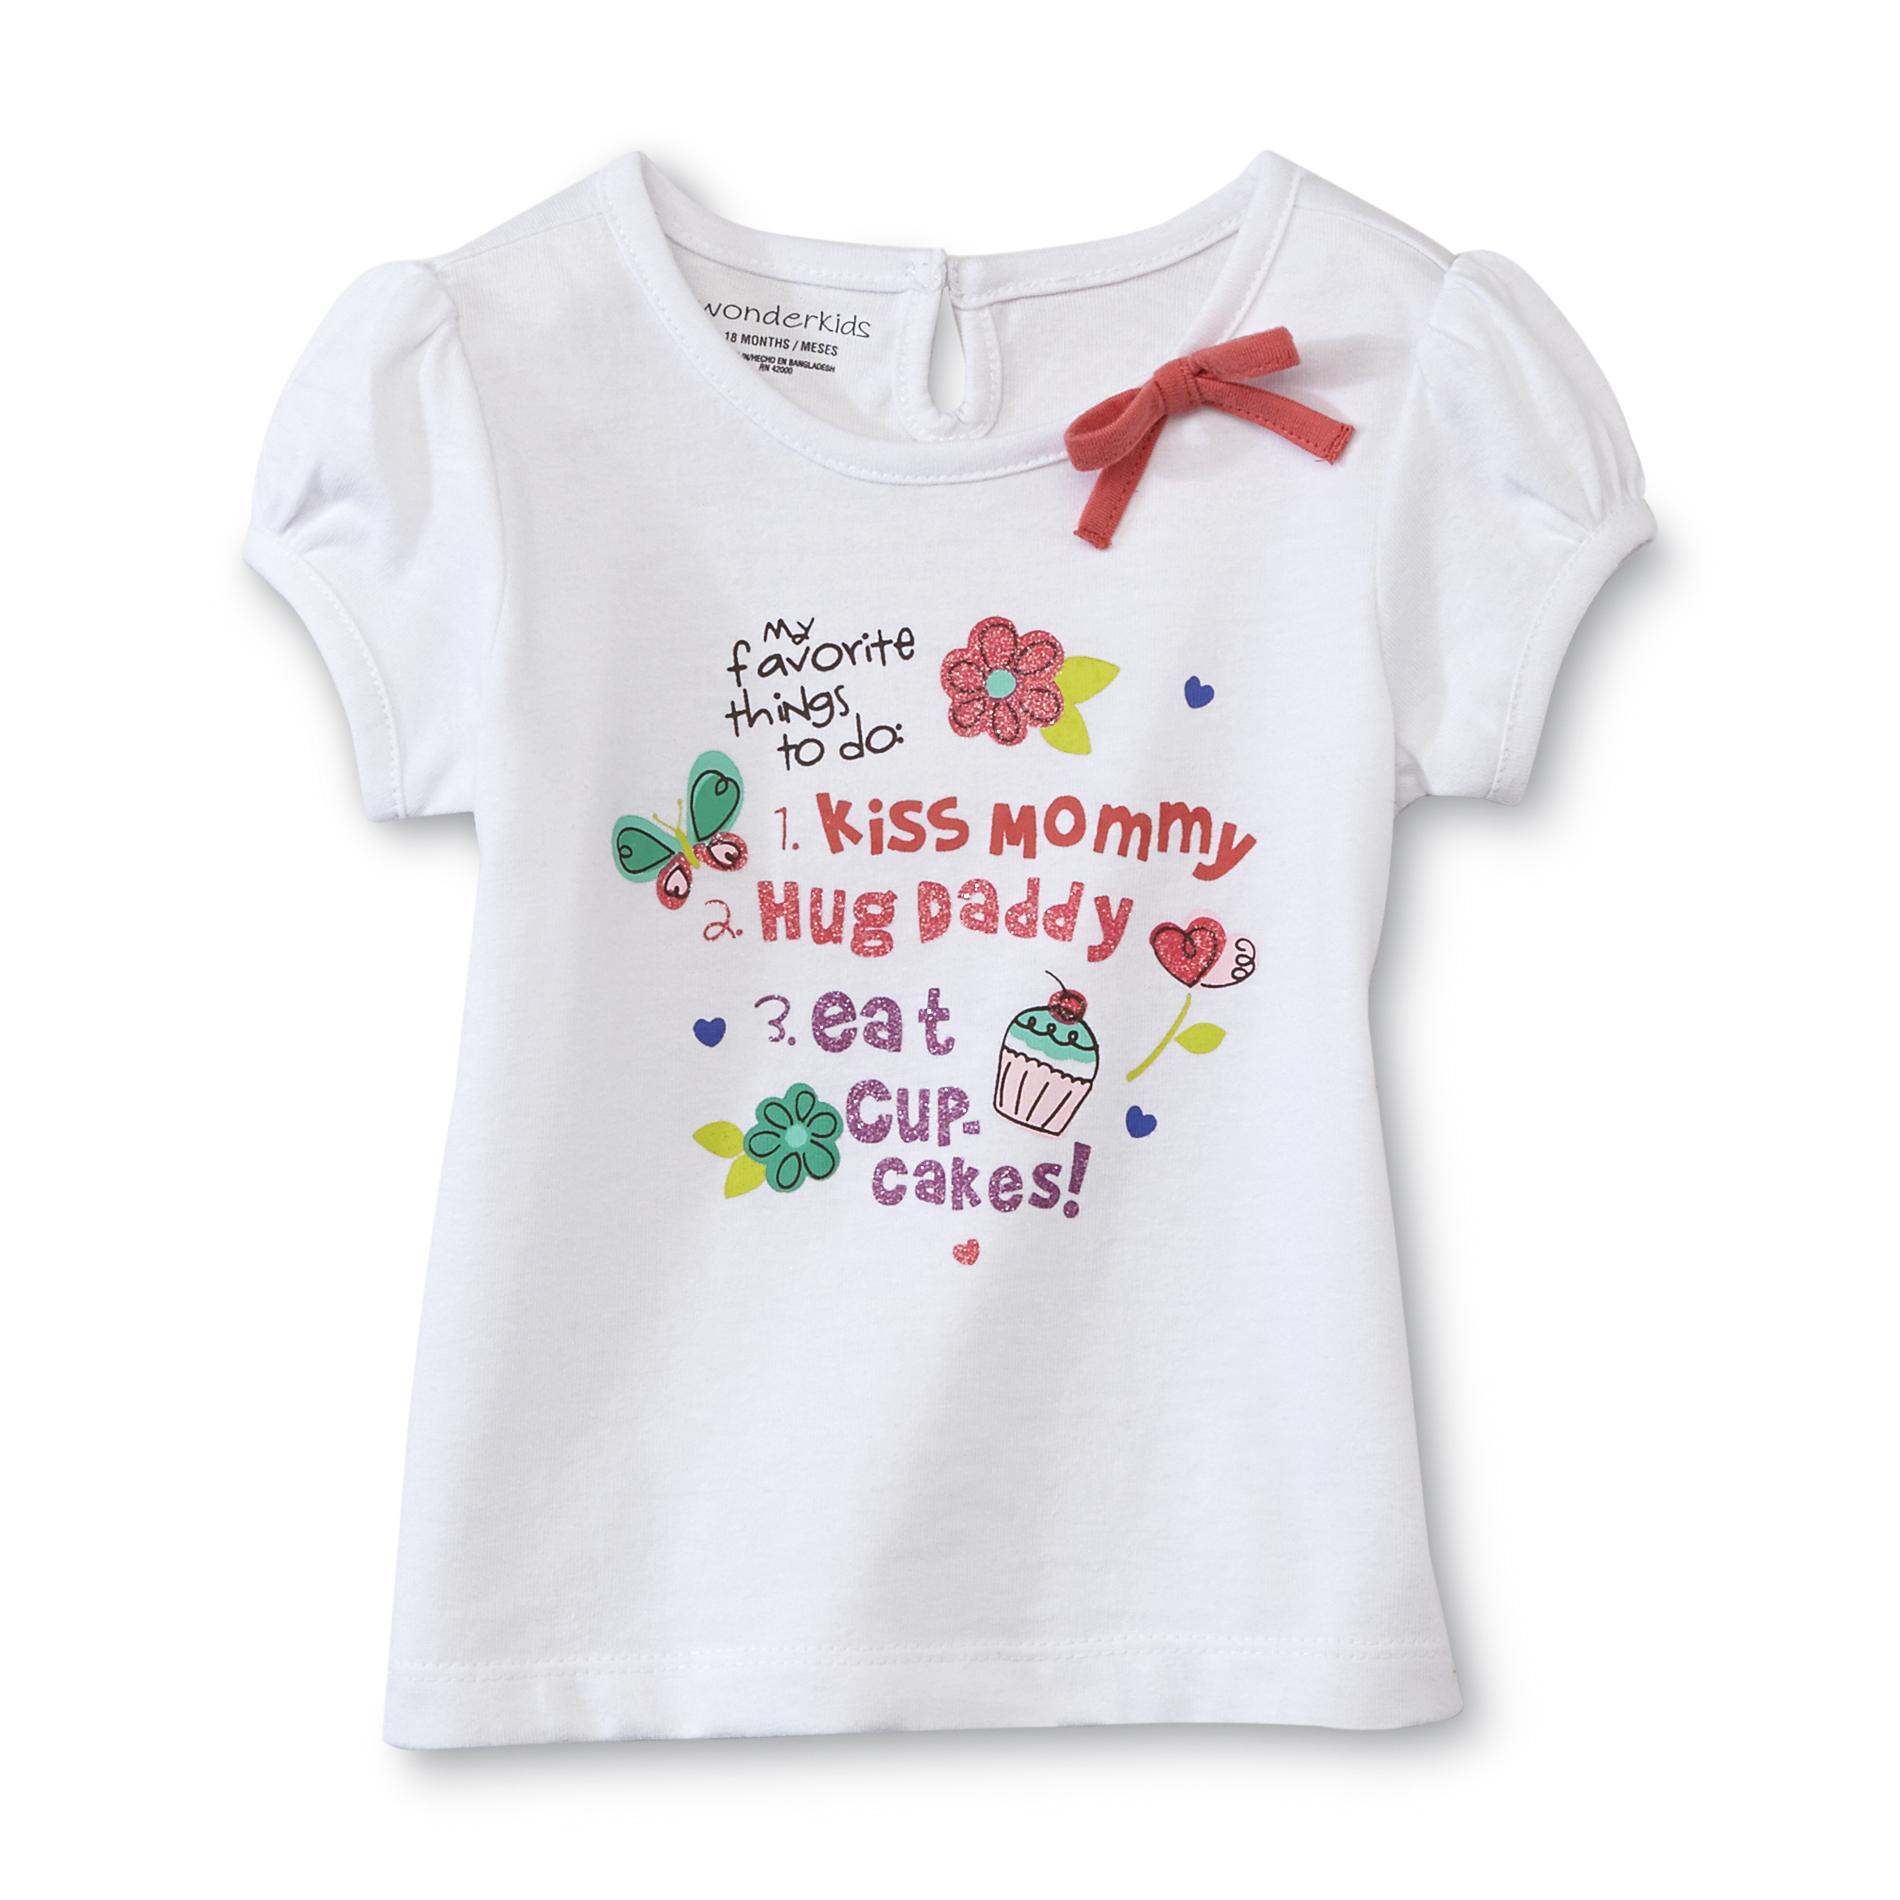 WonderKids Infant & Toddler Girl's T-Shirt - Cupcakes